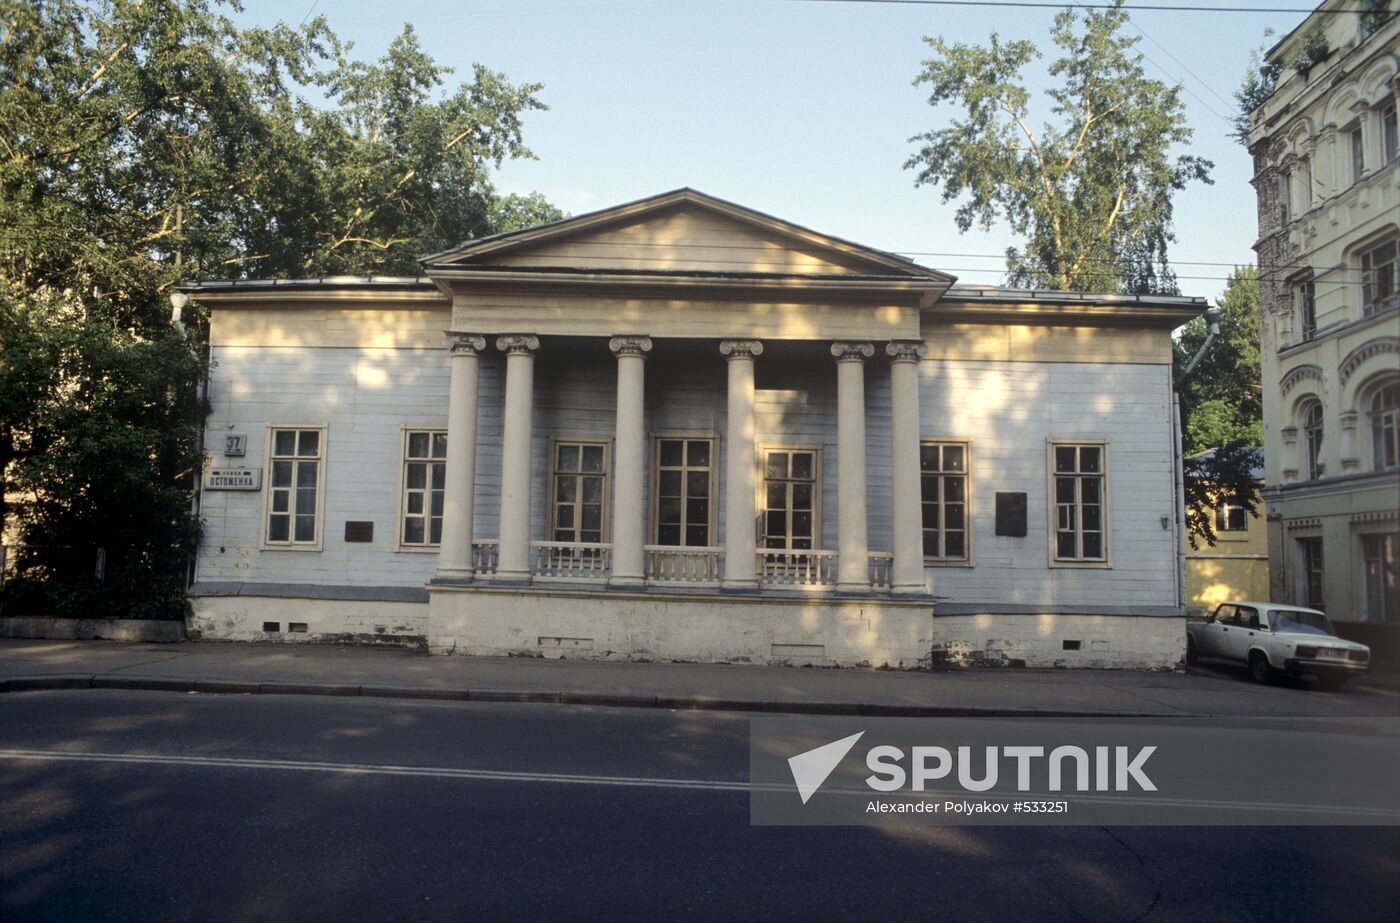 House-Museum of Ivan Turgenev